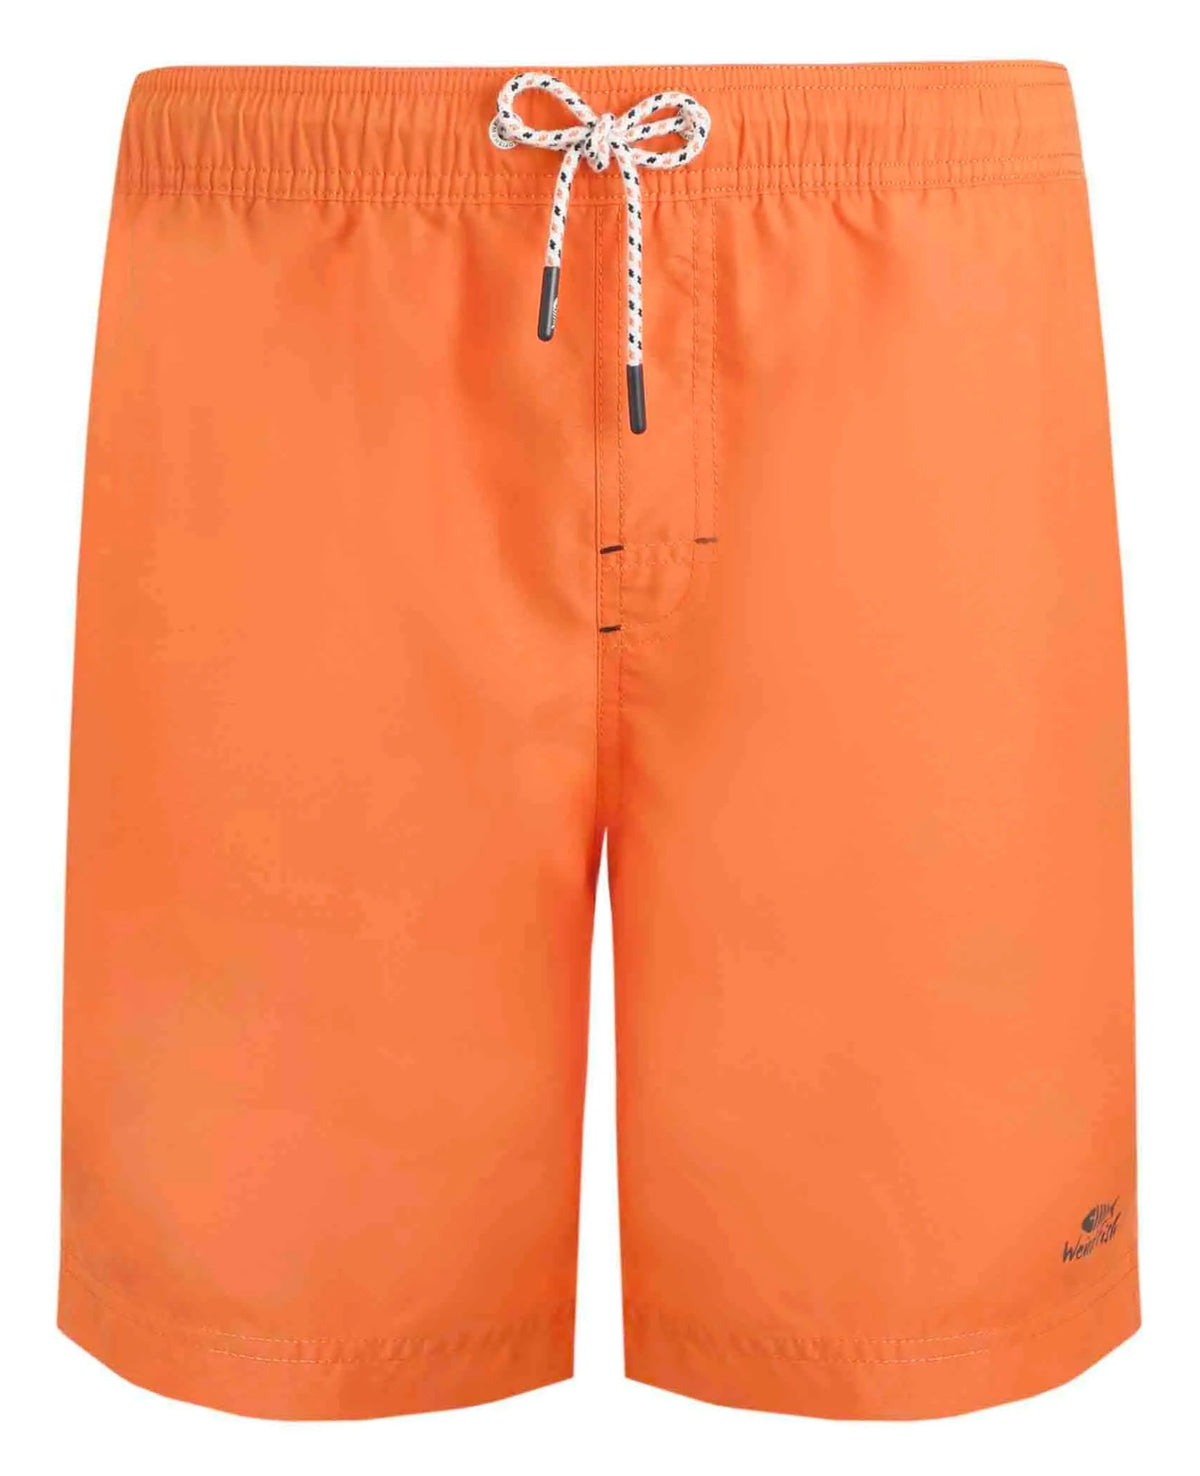 Men's Mango Orange Banning style swim shorts from Weird Fish with elasticated drawstring waist.